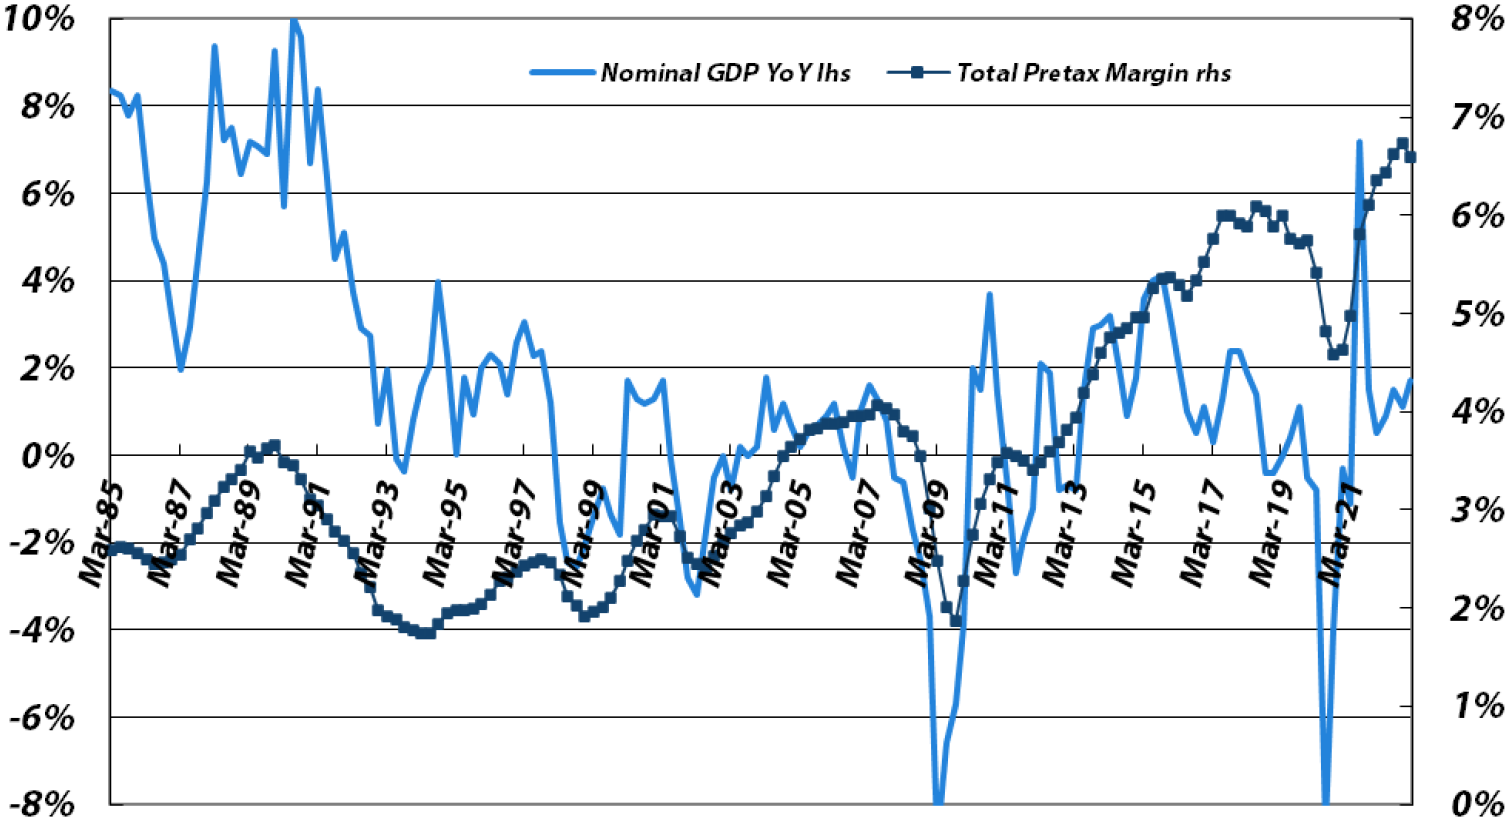 Four-quarter average pre-tax profit margin vs. Japanese nominal GDP YoY growth